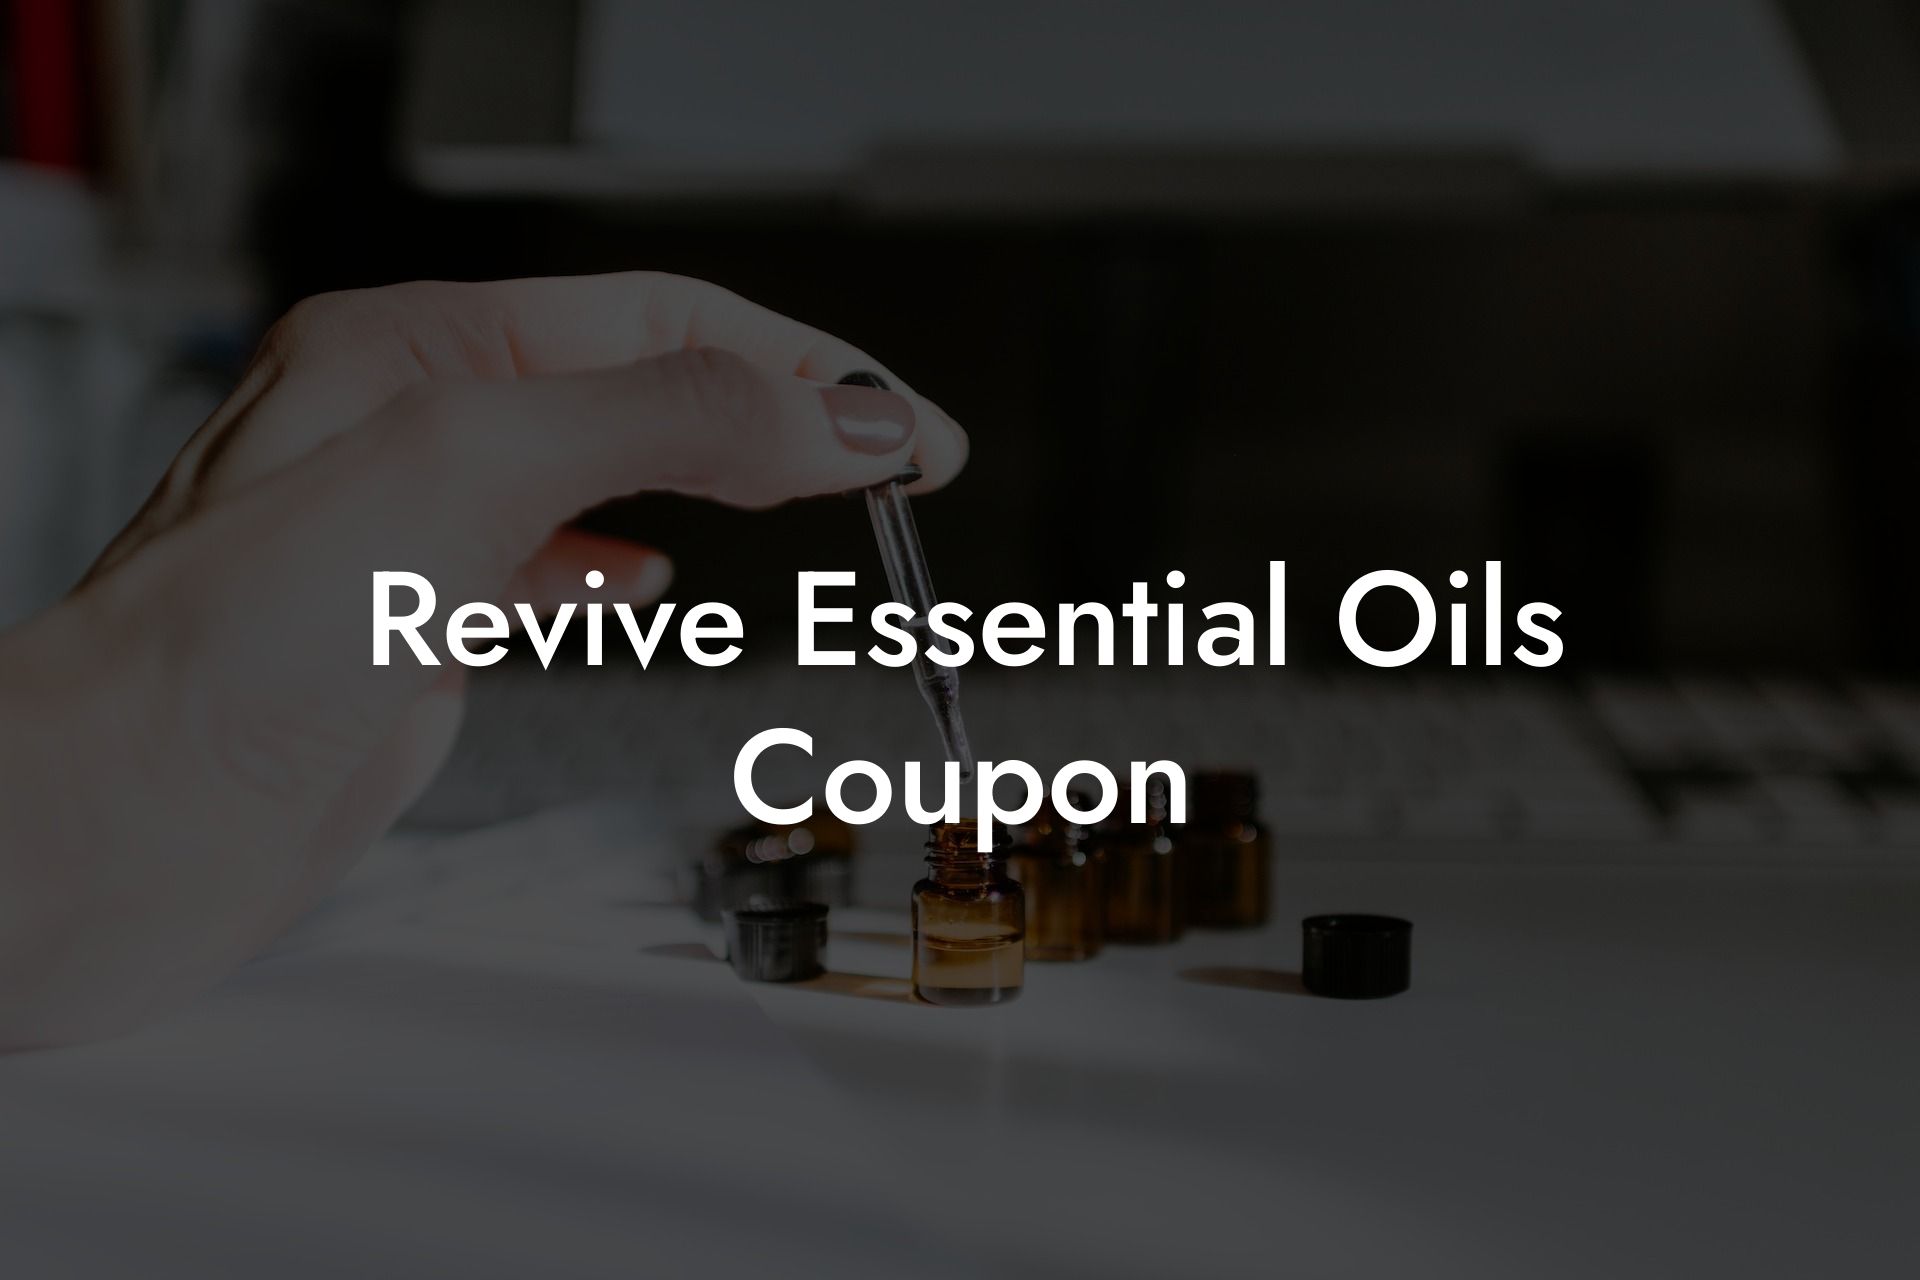 Revive Essential Oils Coupon